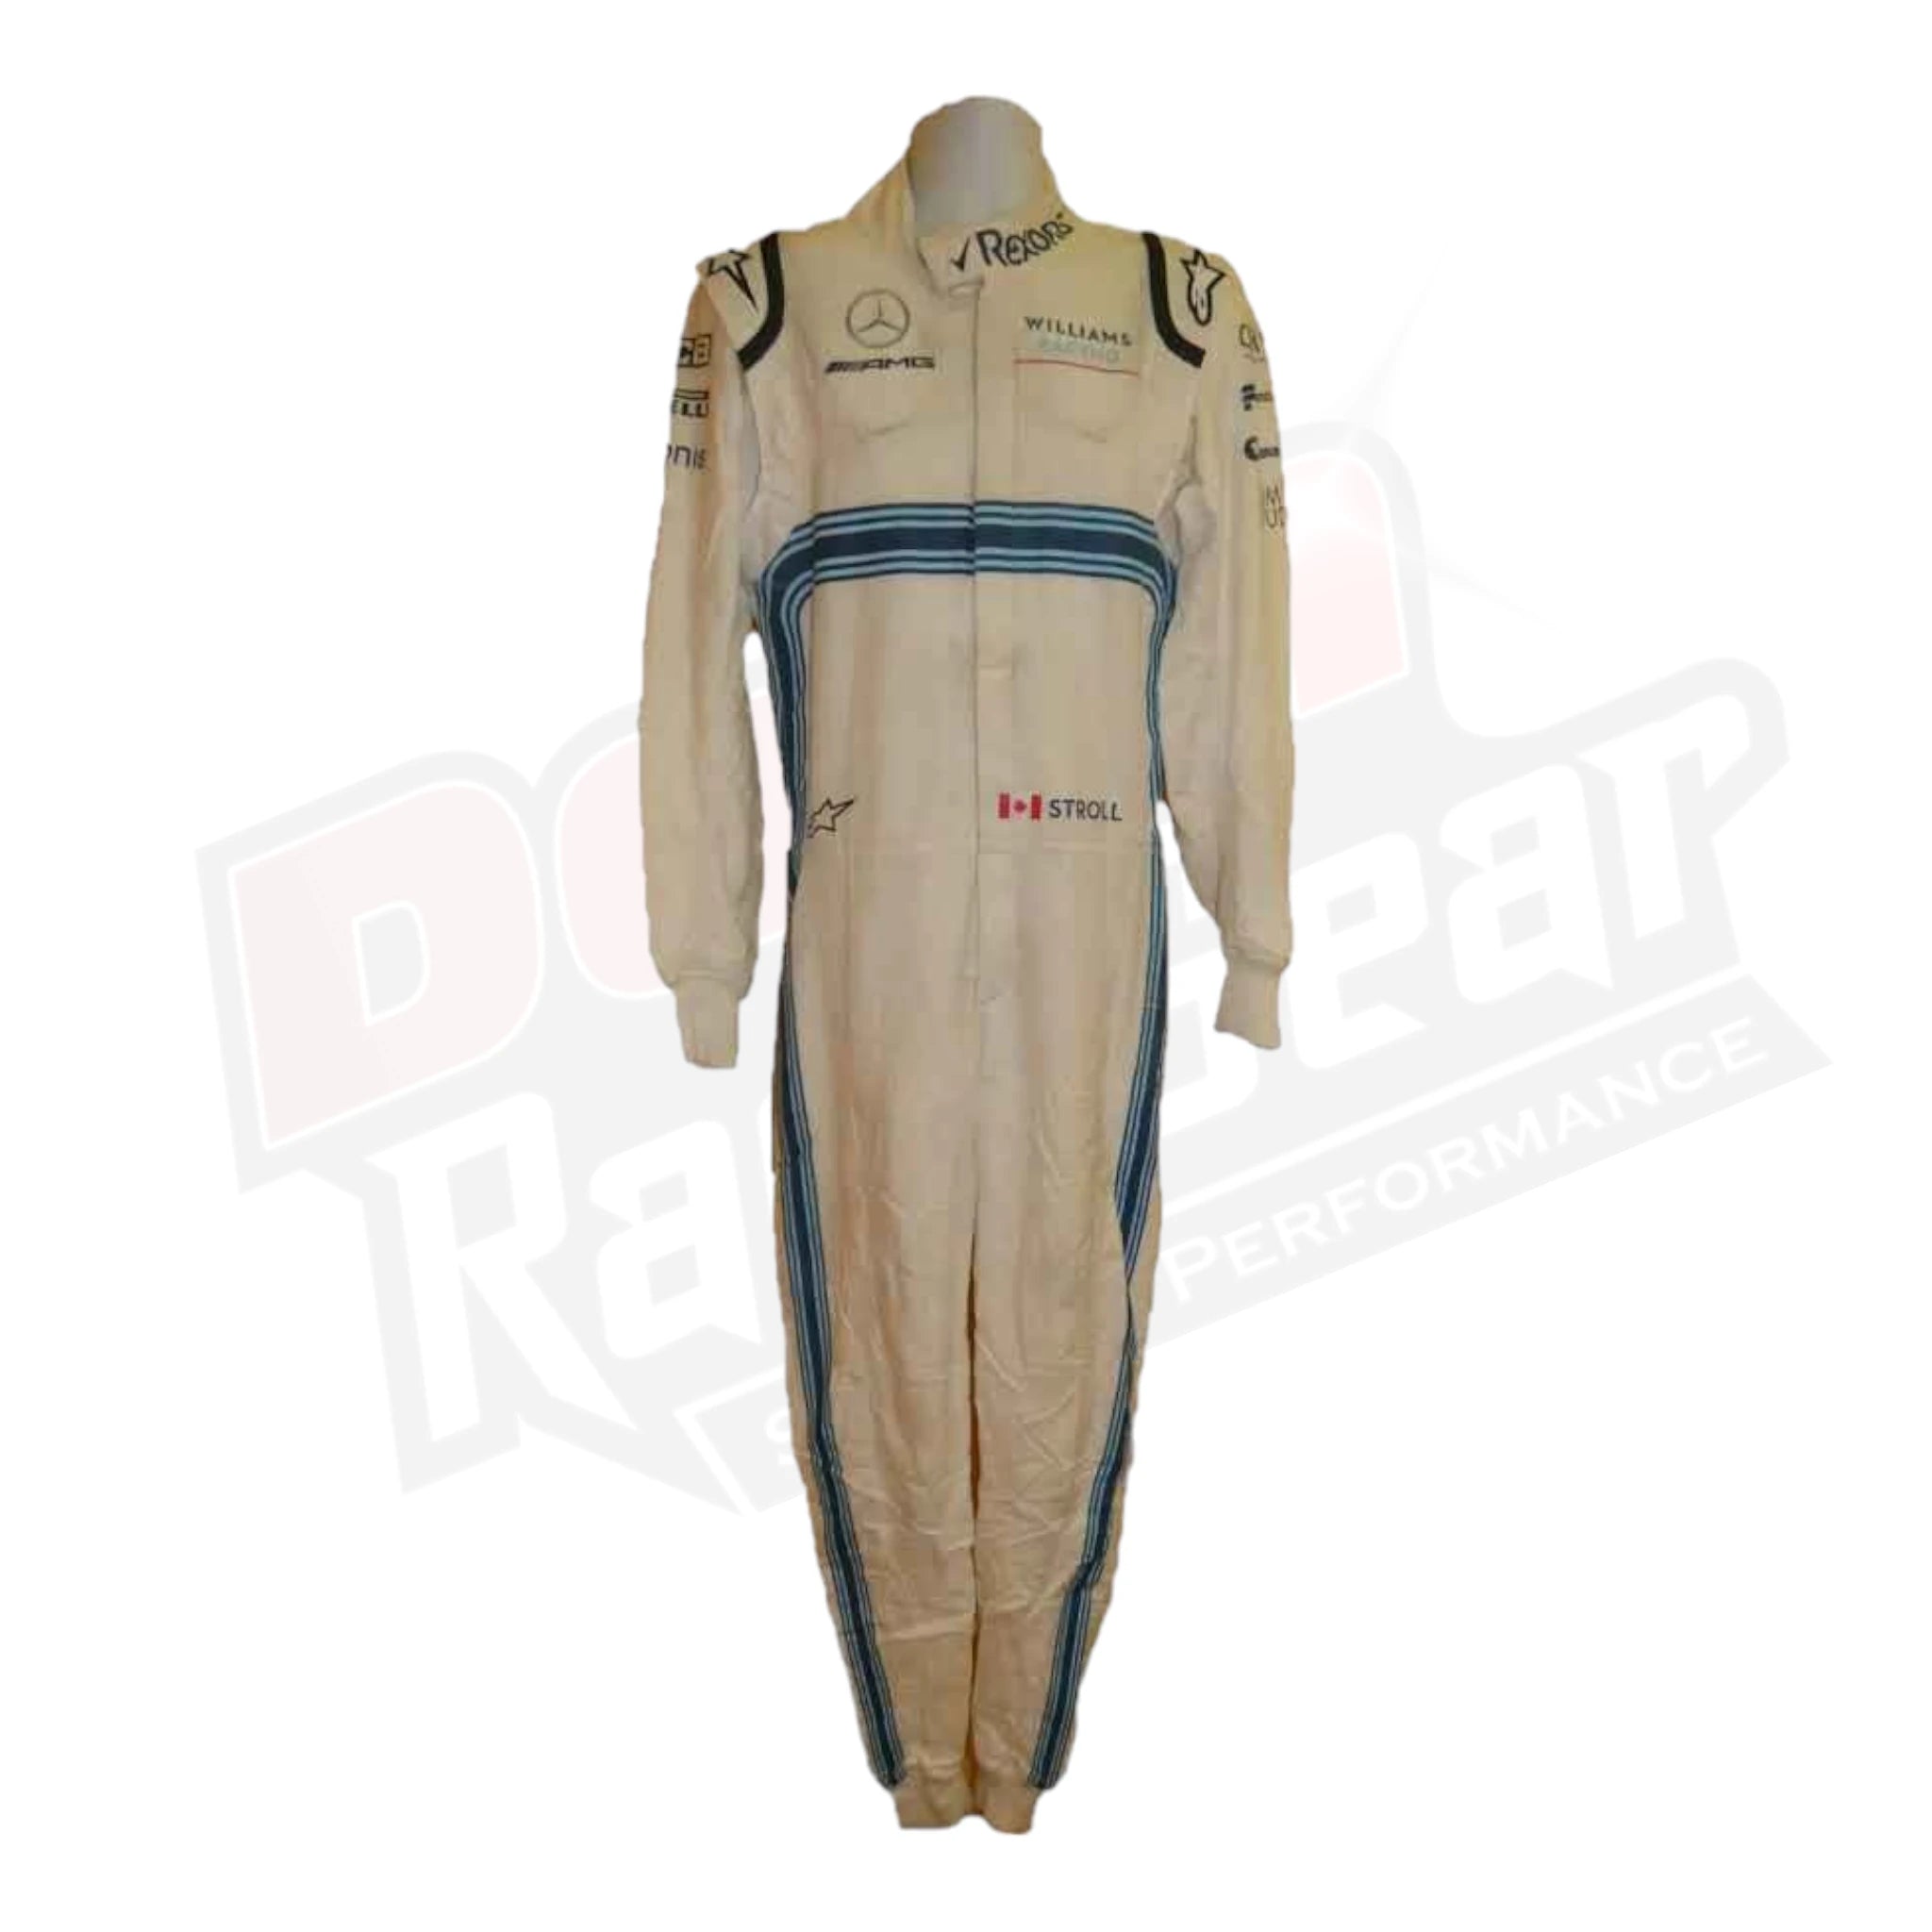 2018 Lance Stroll  Abu Dhabi GP Williams race suit